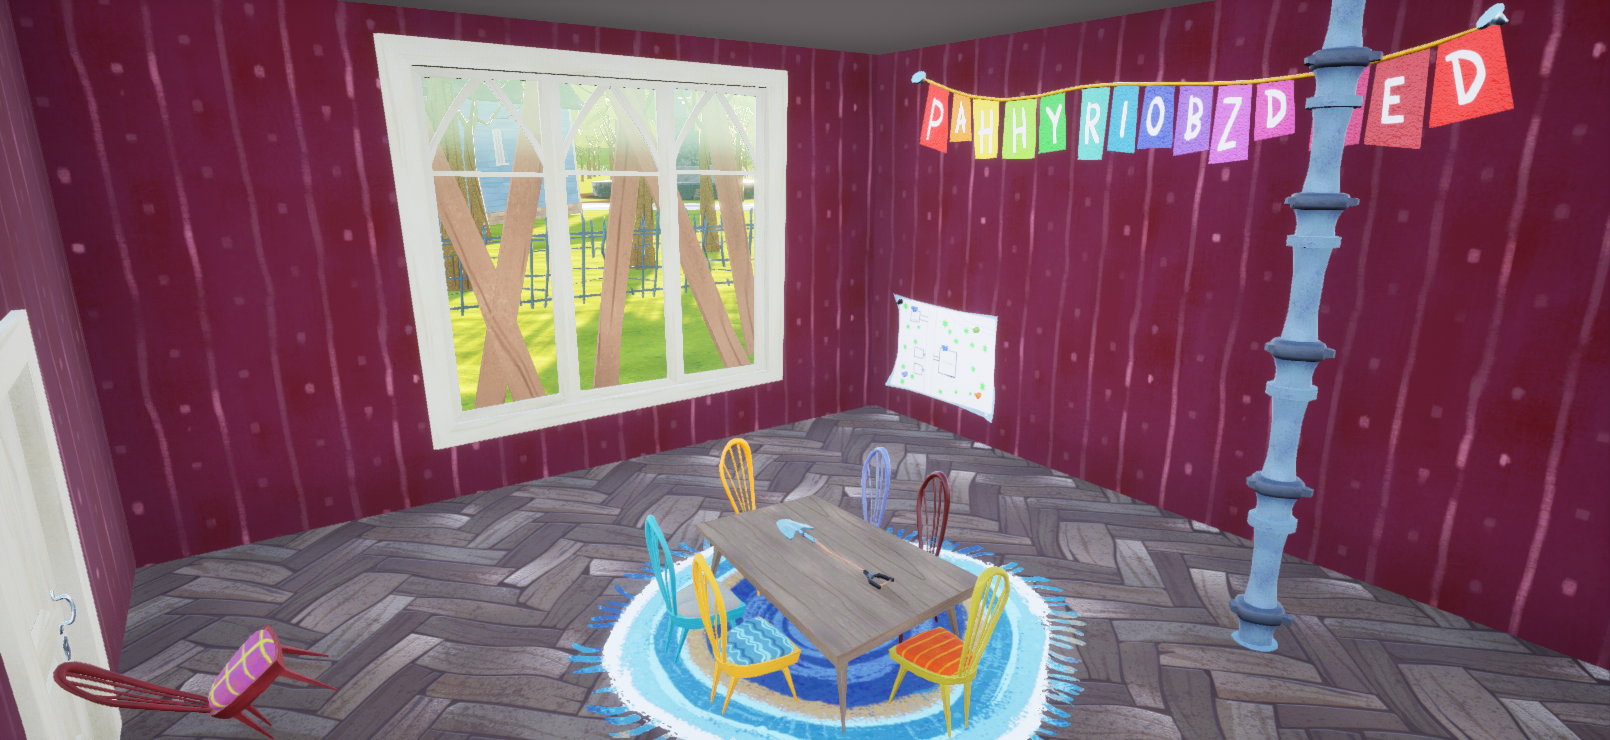 Seems like the birthday room has an actual purpose